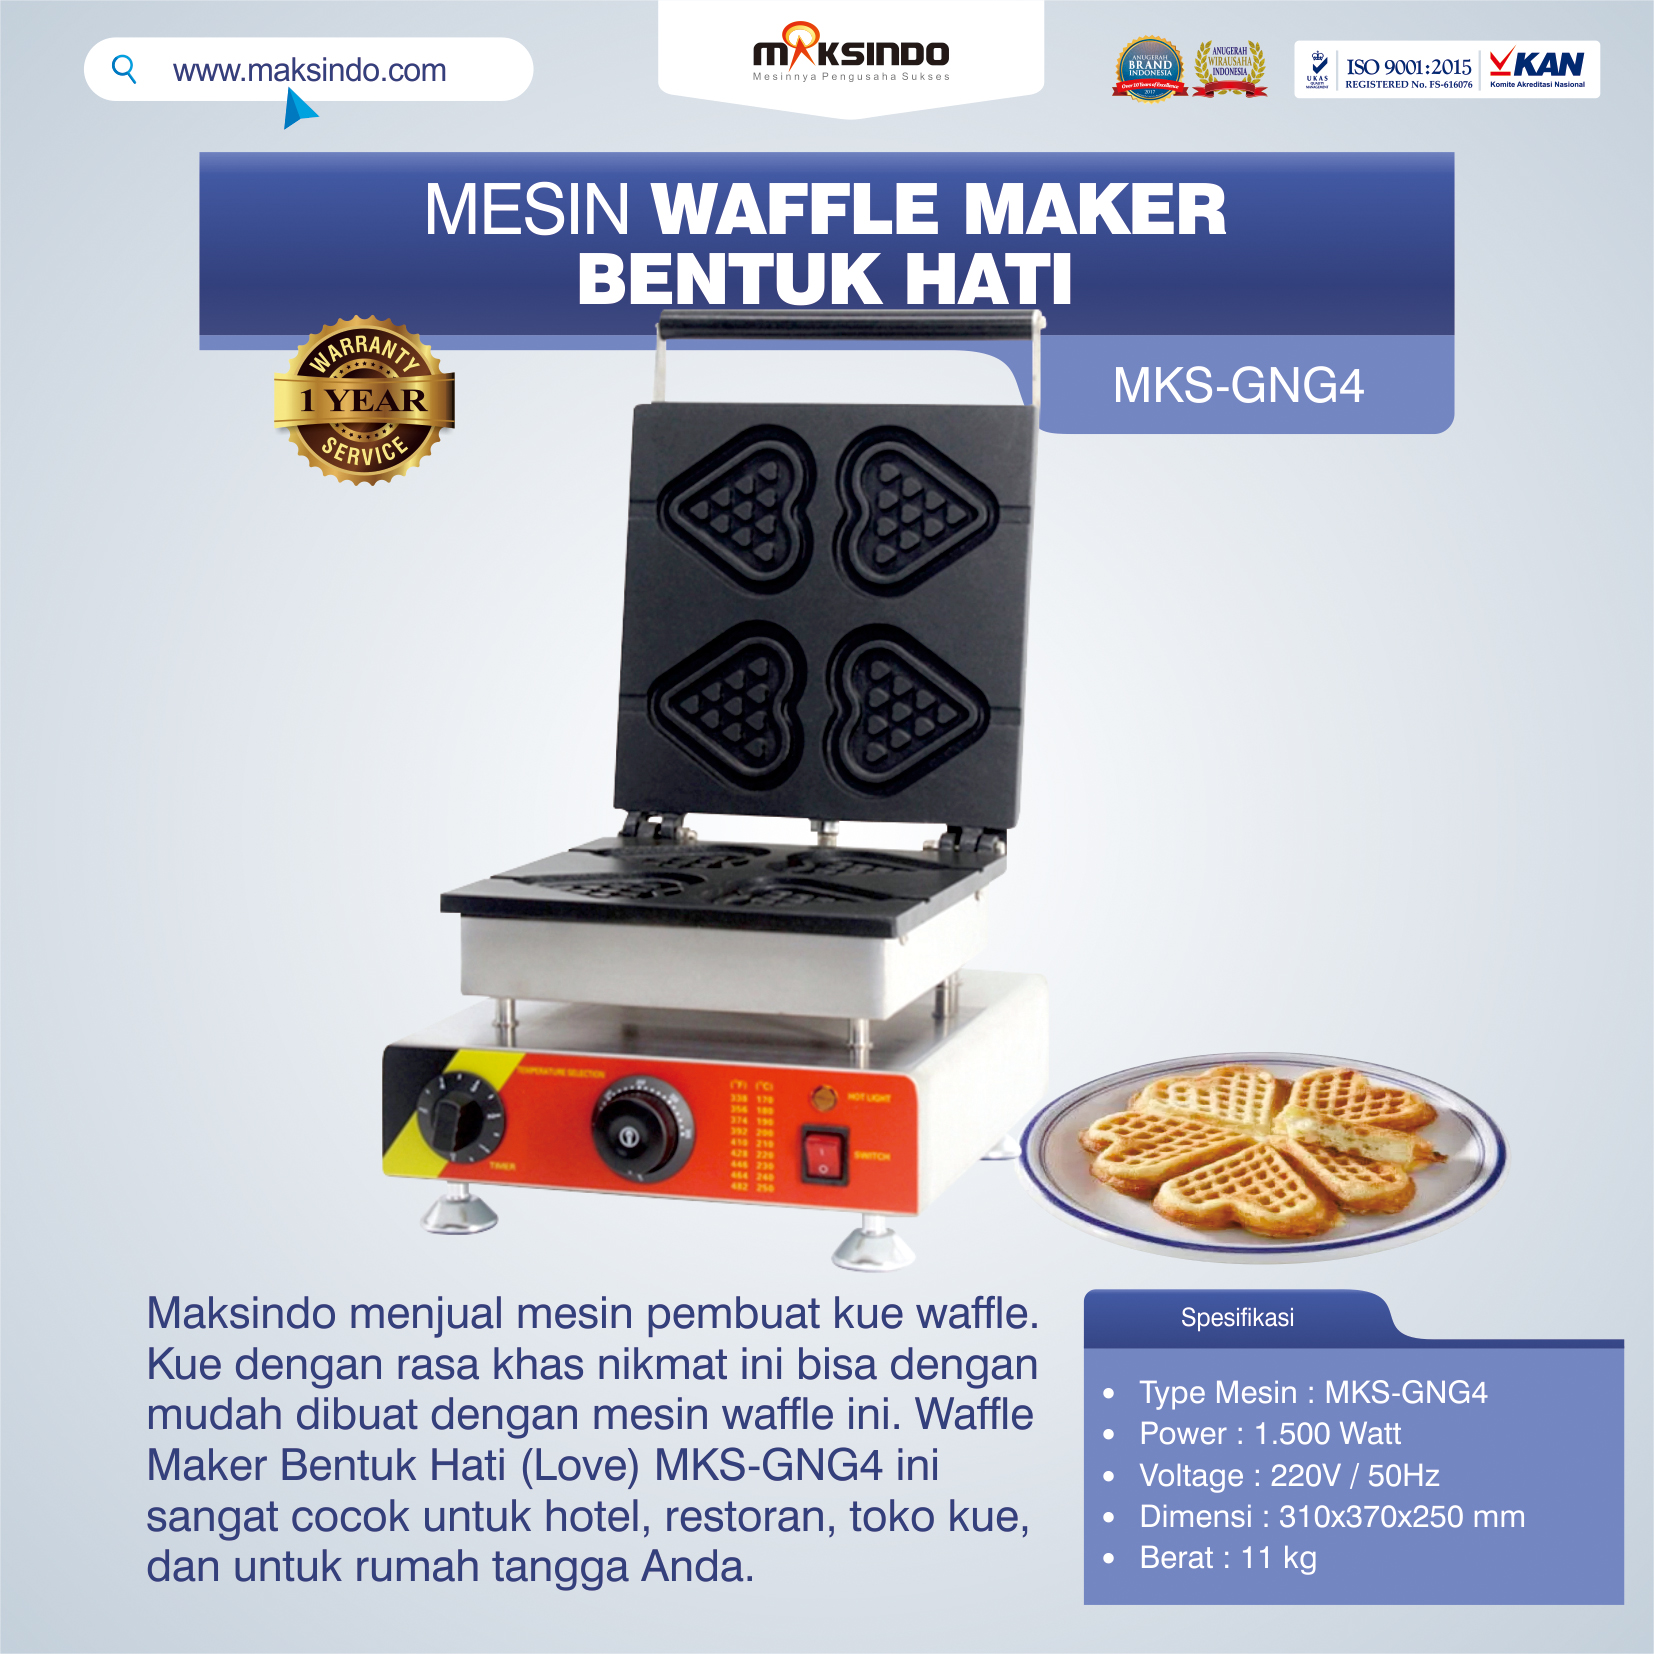 Mesin Waffle Maker Bentuk Hati (Love) MKS-GNG4